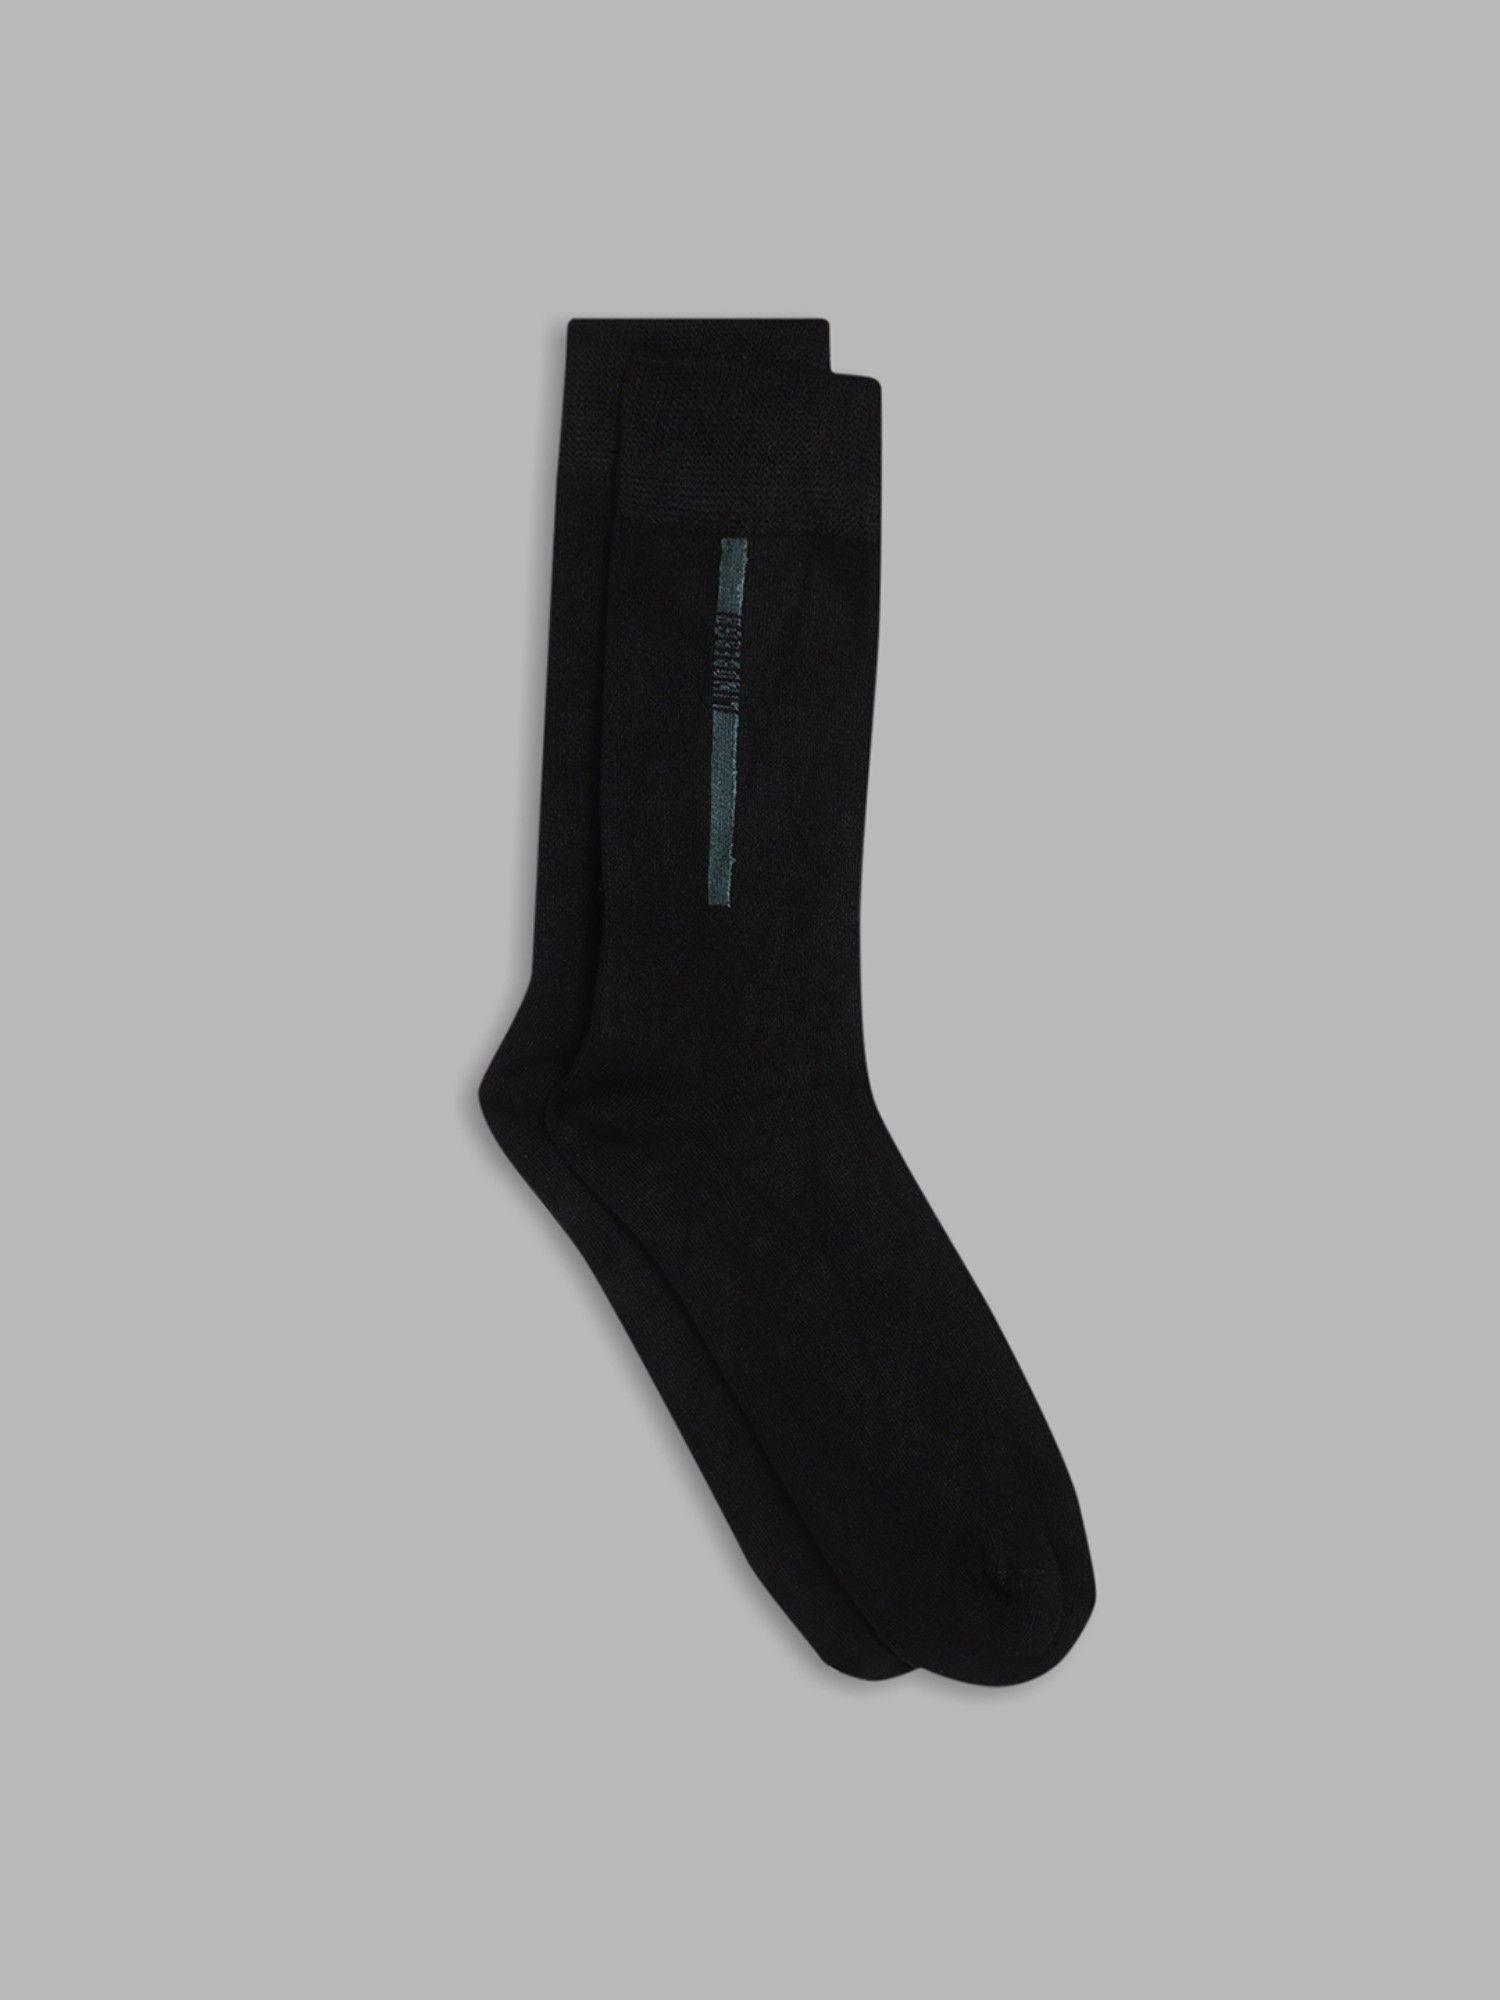 blue & black solid socks